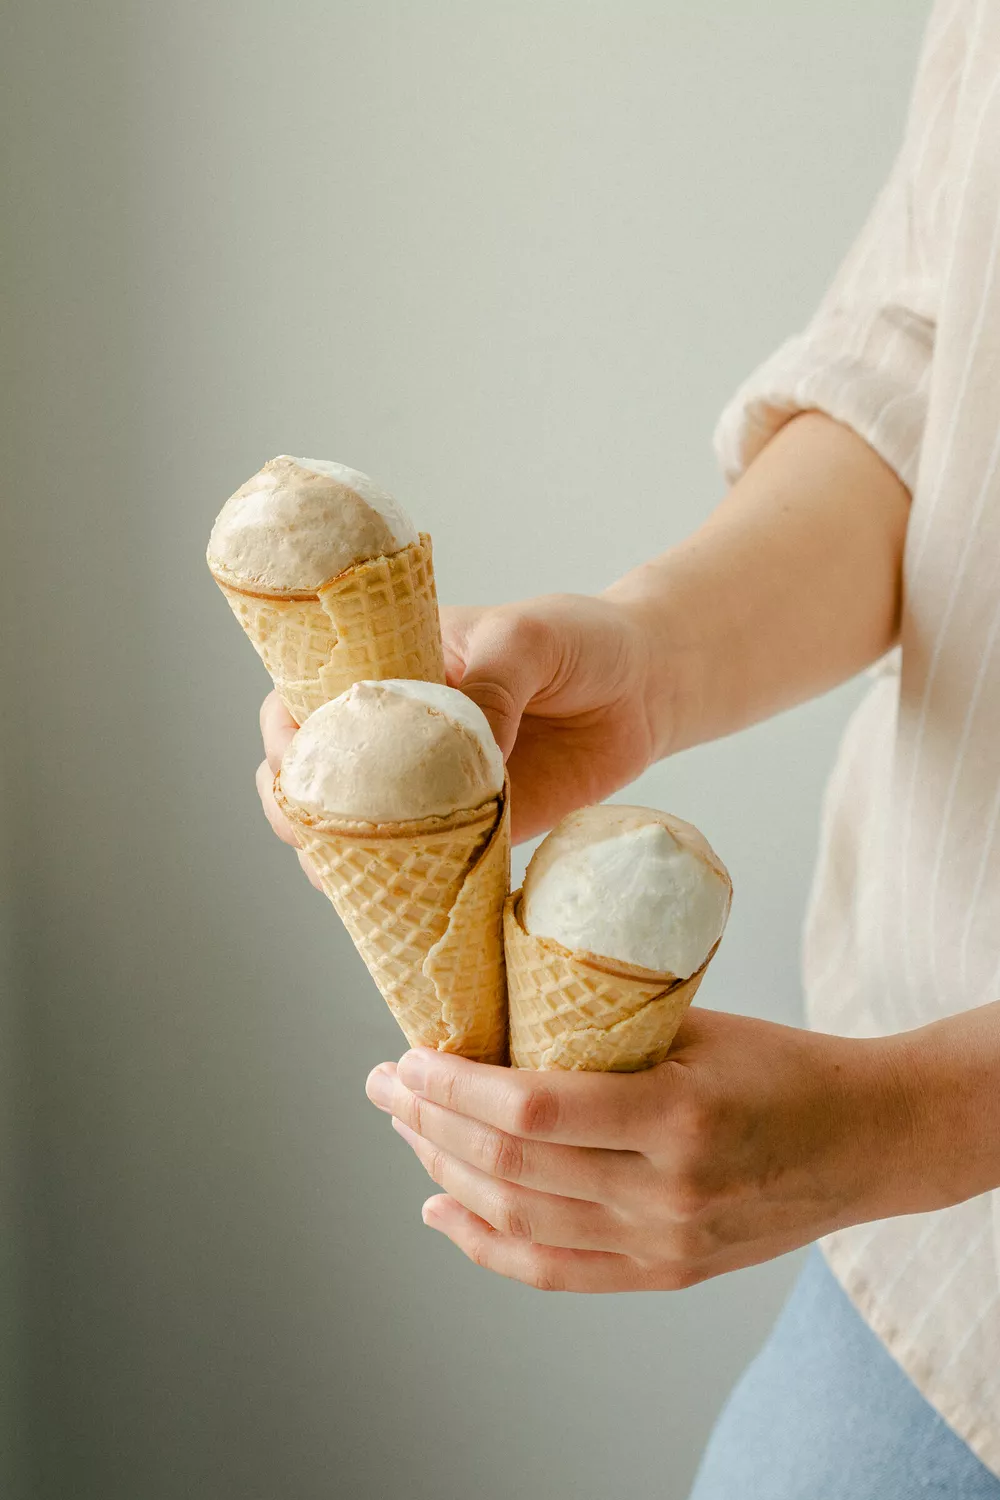 Обзор летних новинок Самоката: напитки и мороженое